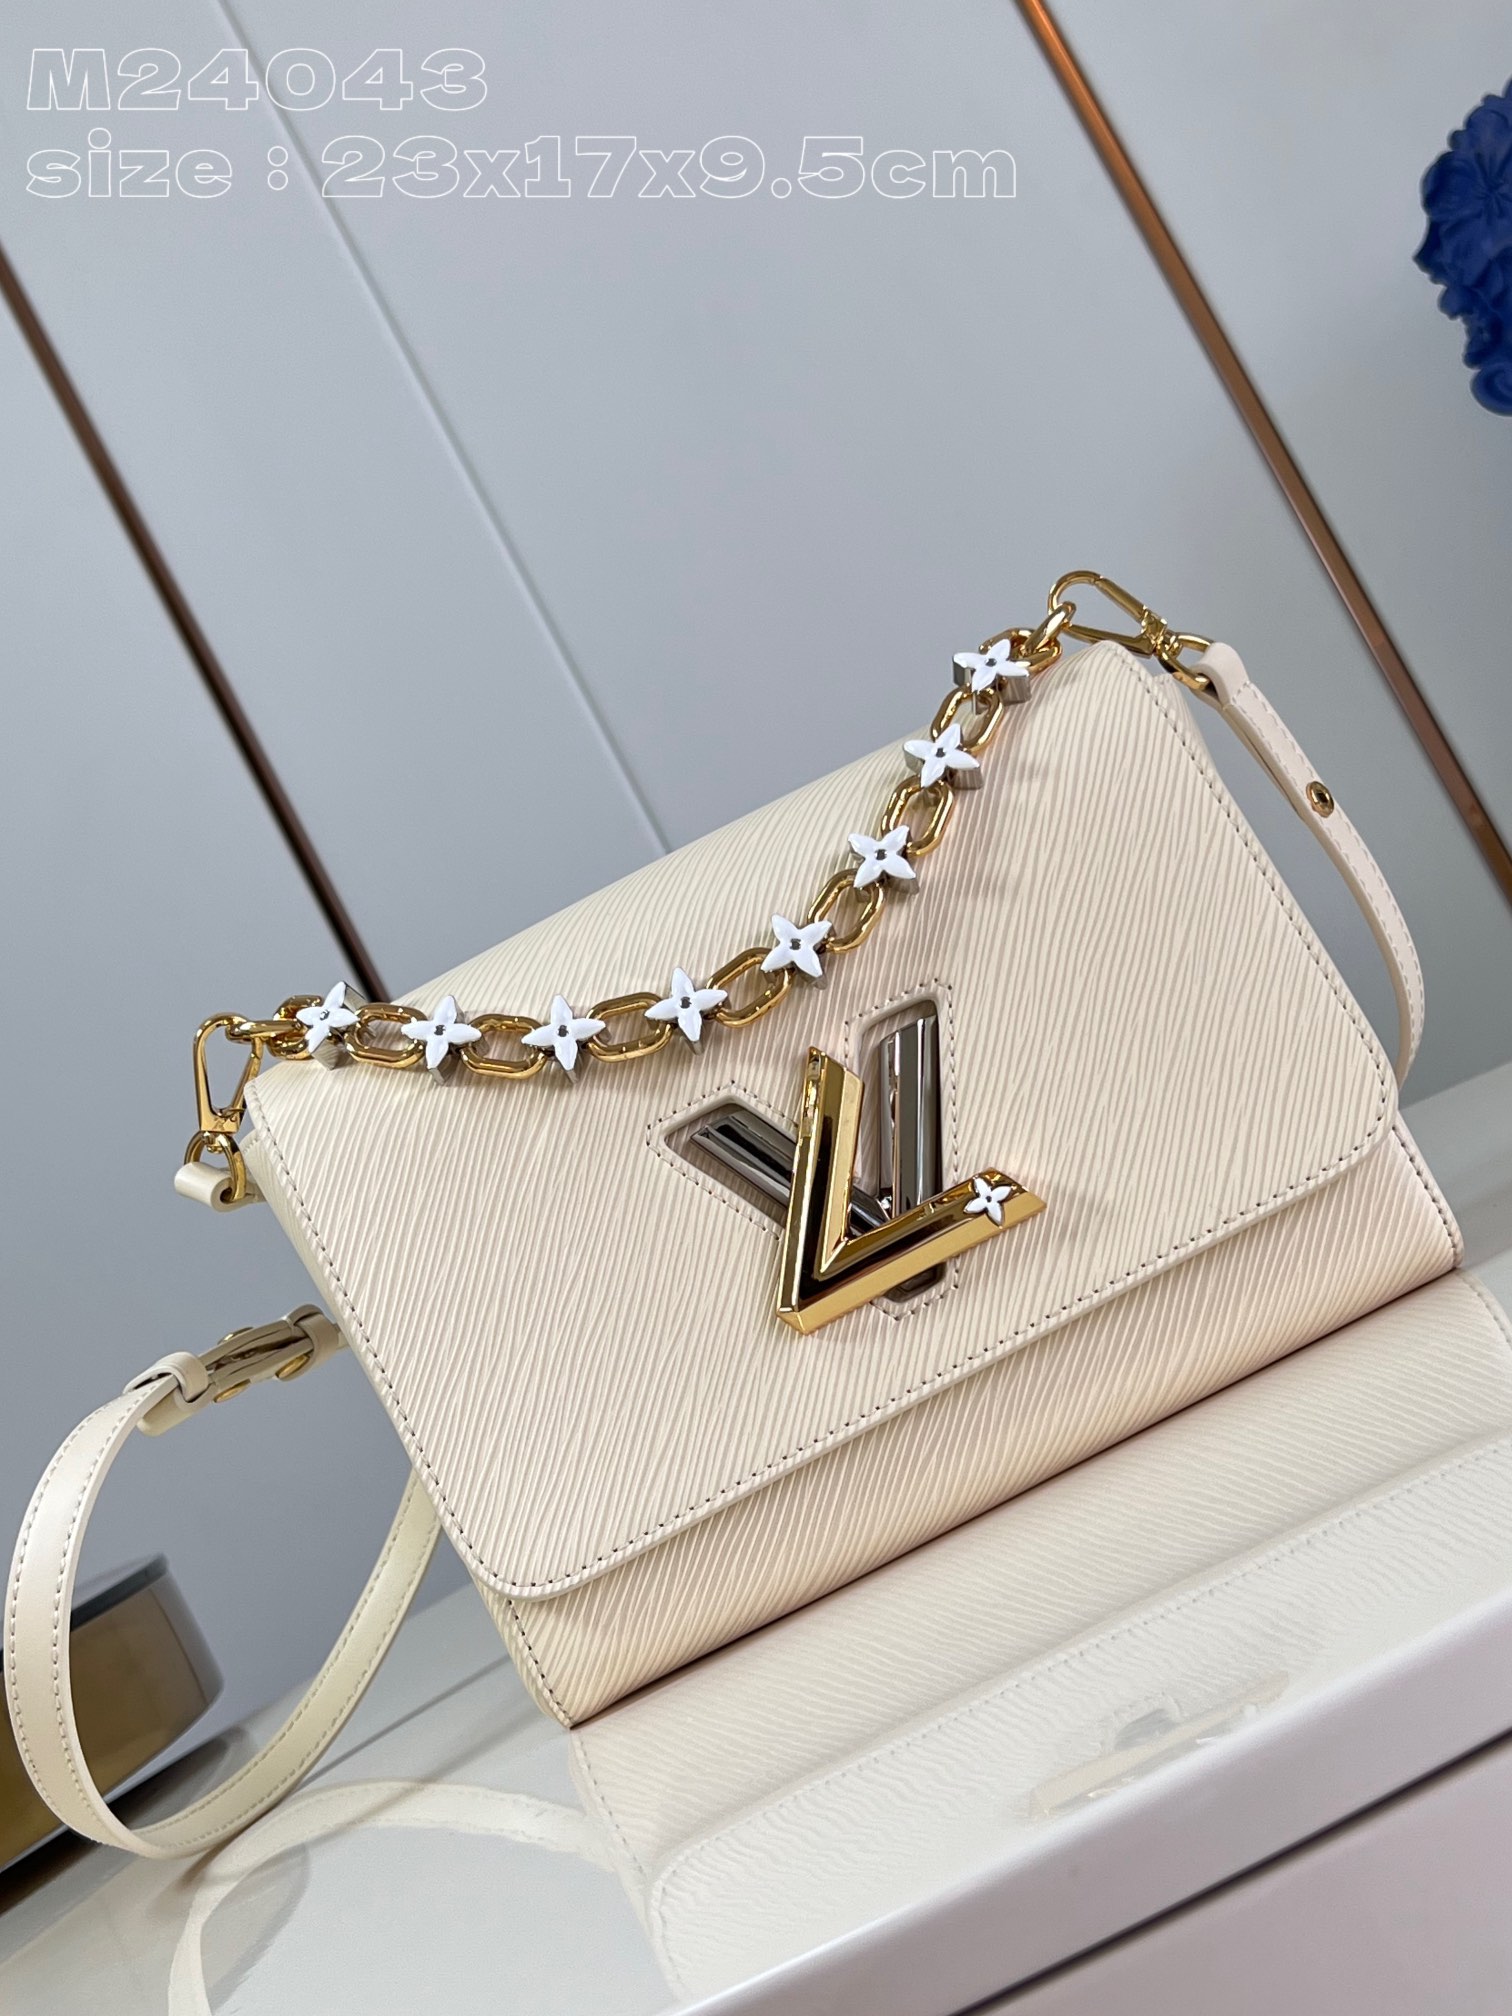 Beste Großhandel Replik
 Louis Vuitton Taschen Handtaschen Weiß Epi Frühlingskollektion M24043